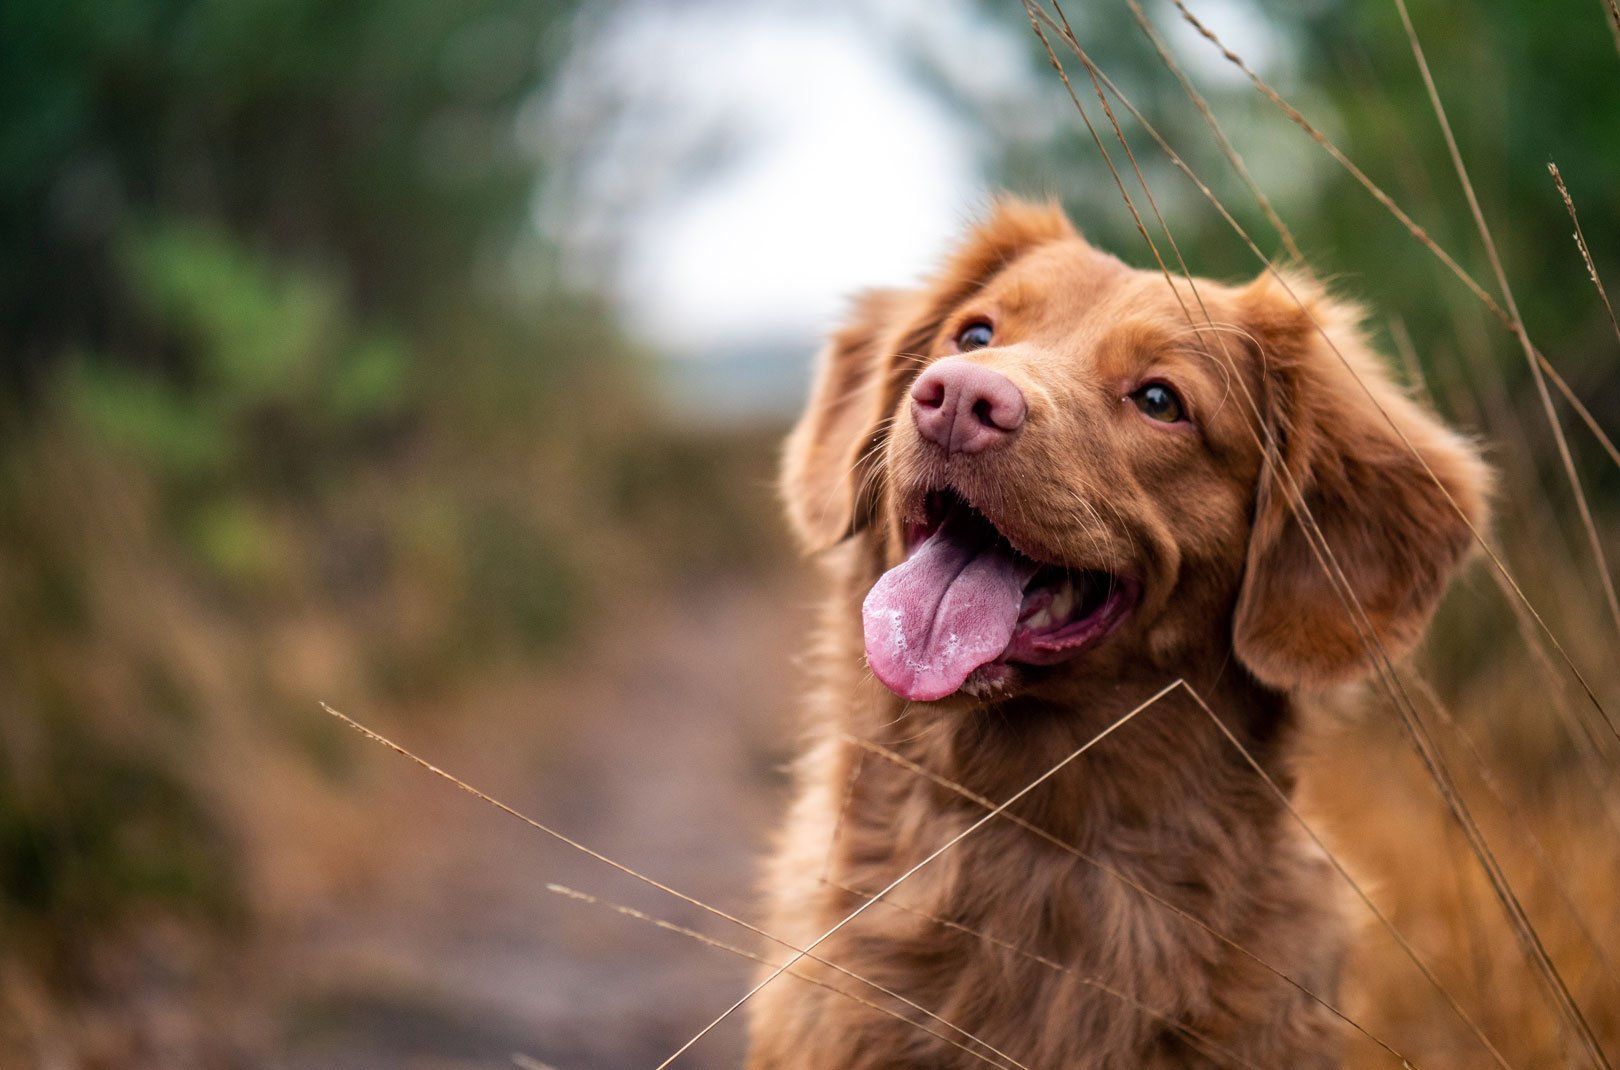 A happy dog sitting in a field.